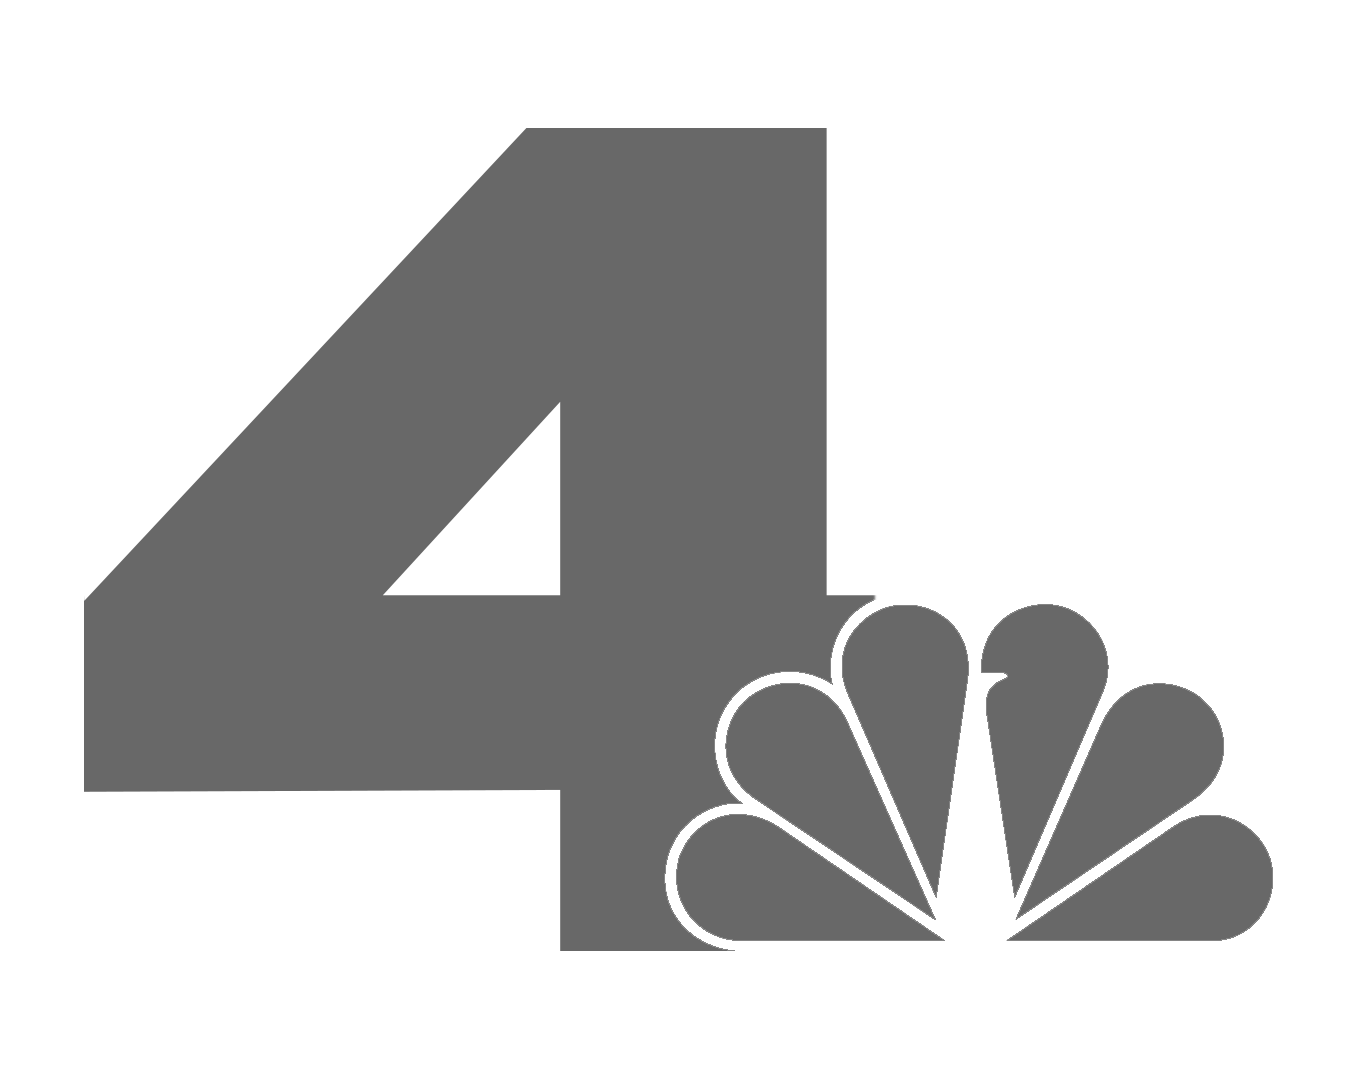 Channel 4 NBC Los Angeles